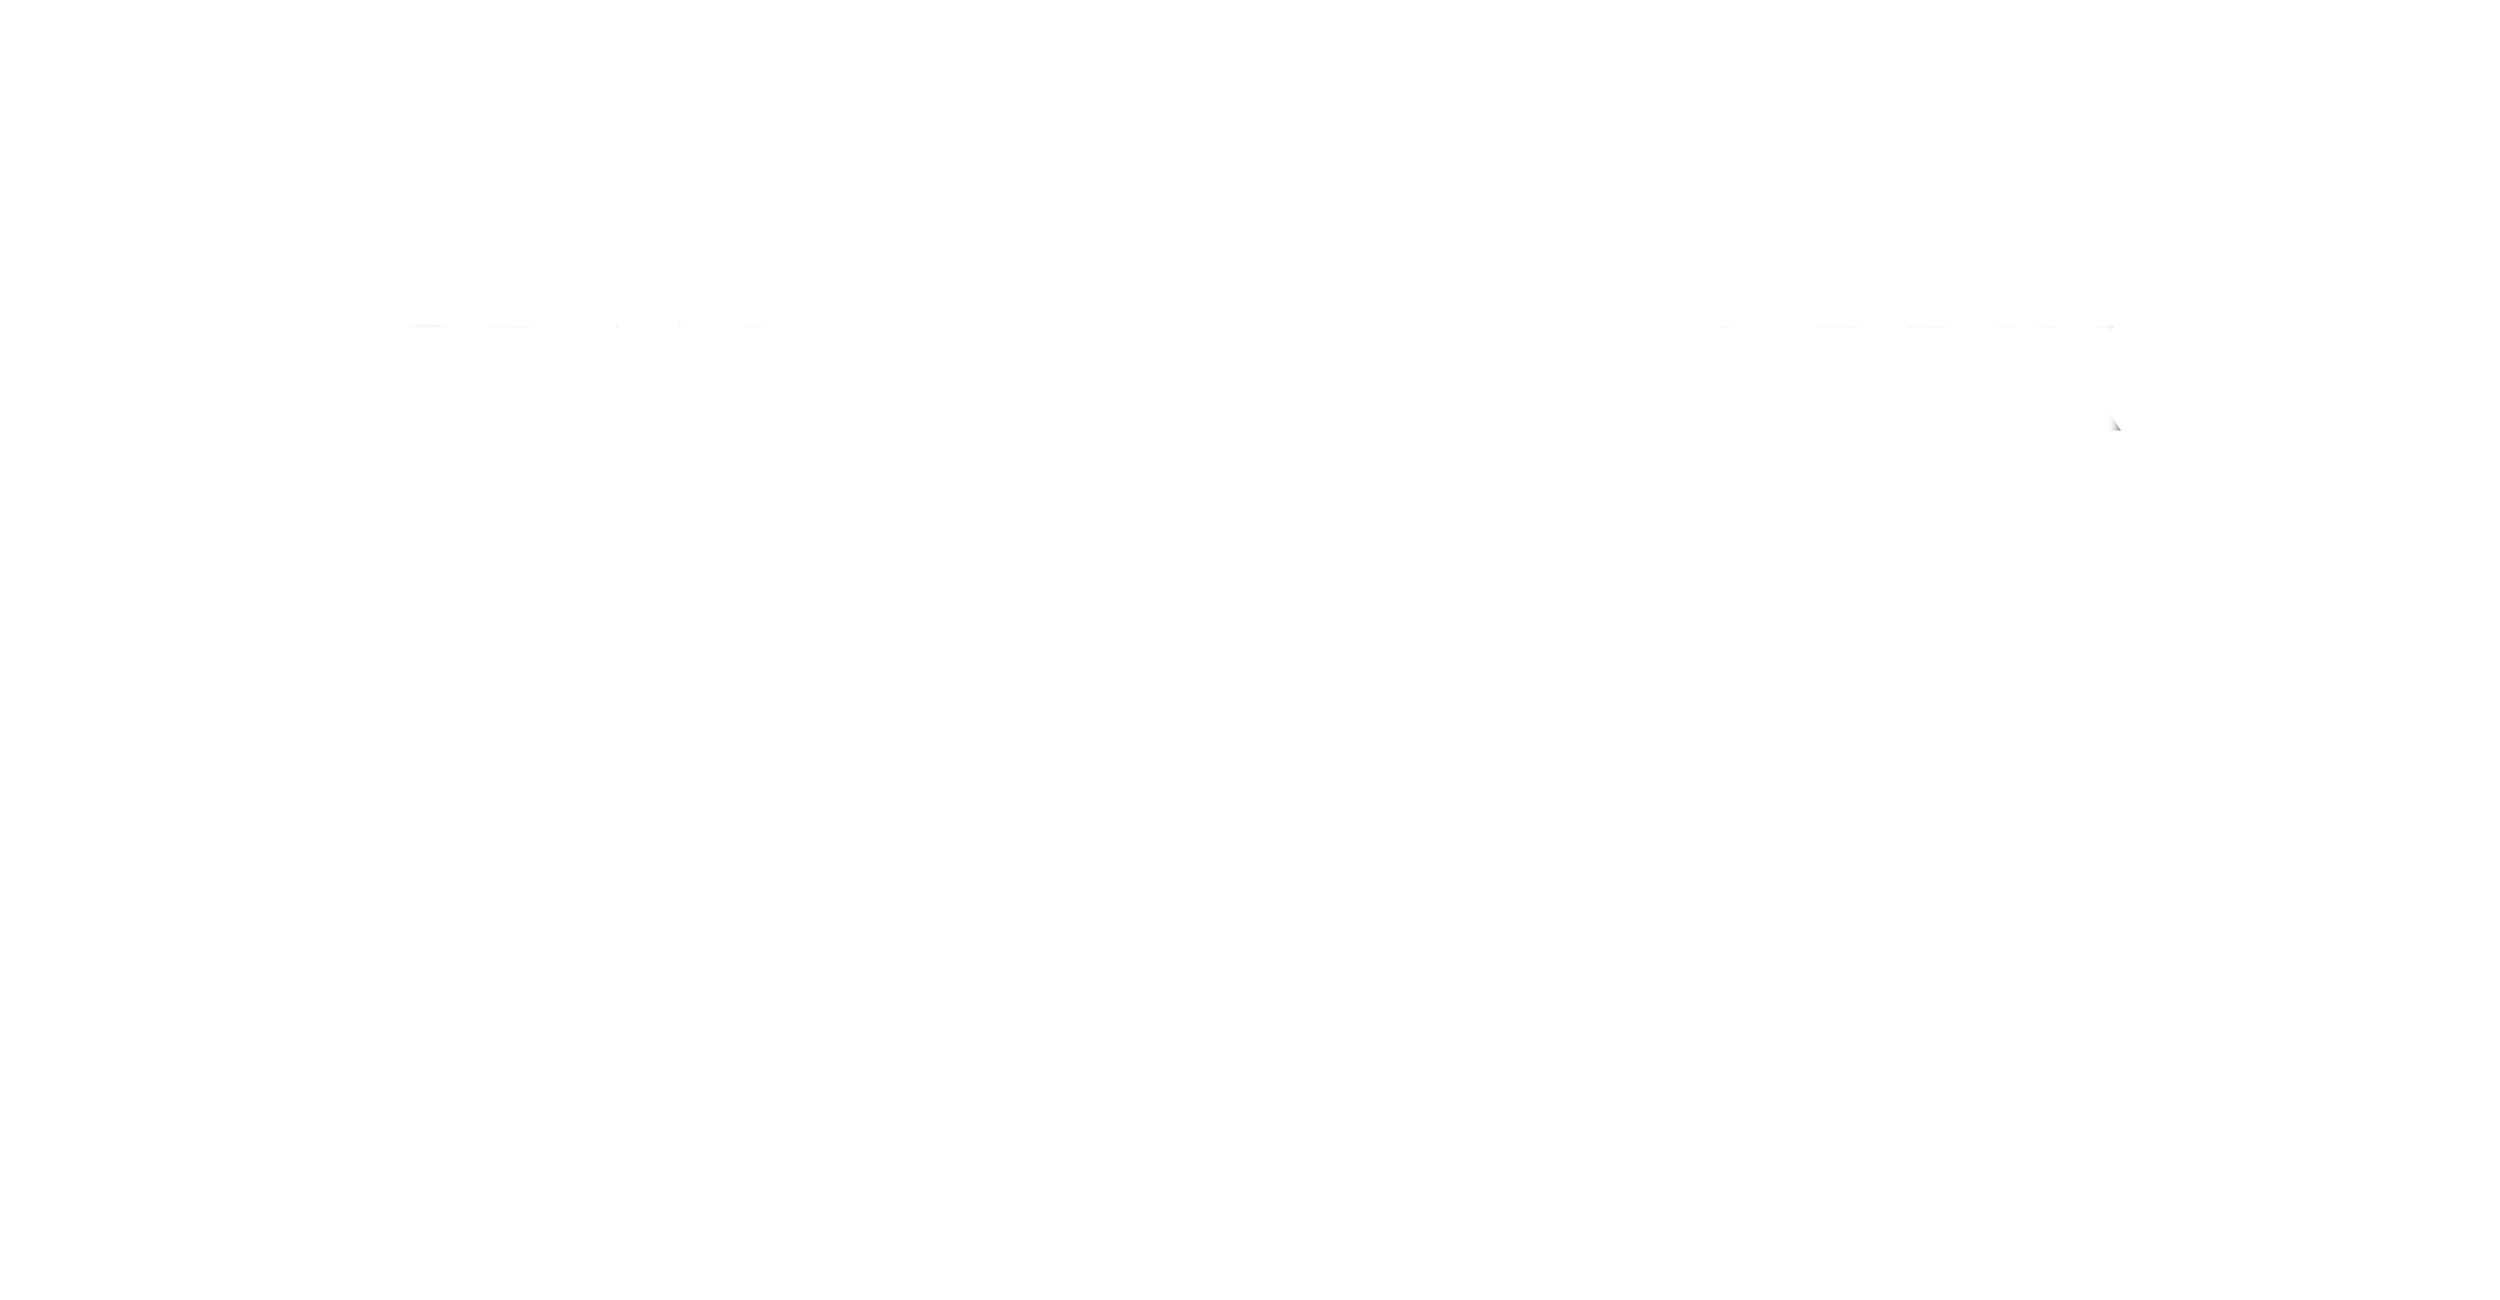 NewImages Festival XR Development Market selected 2024